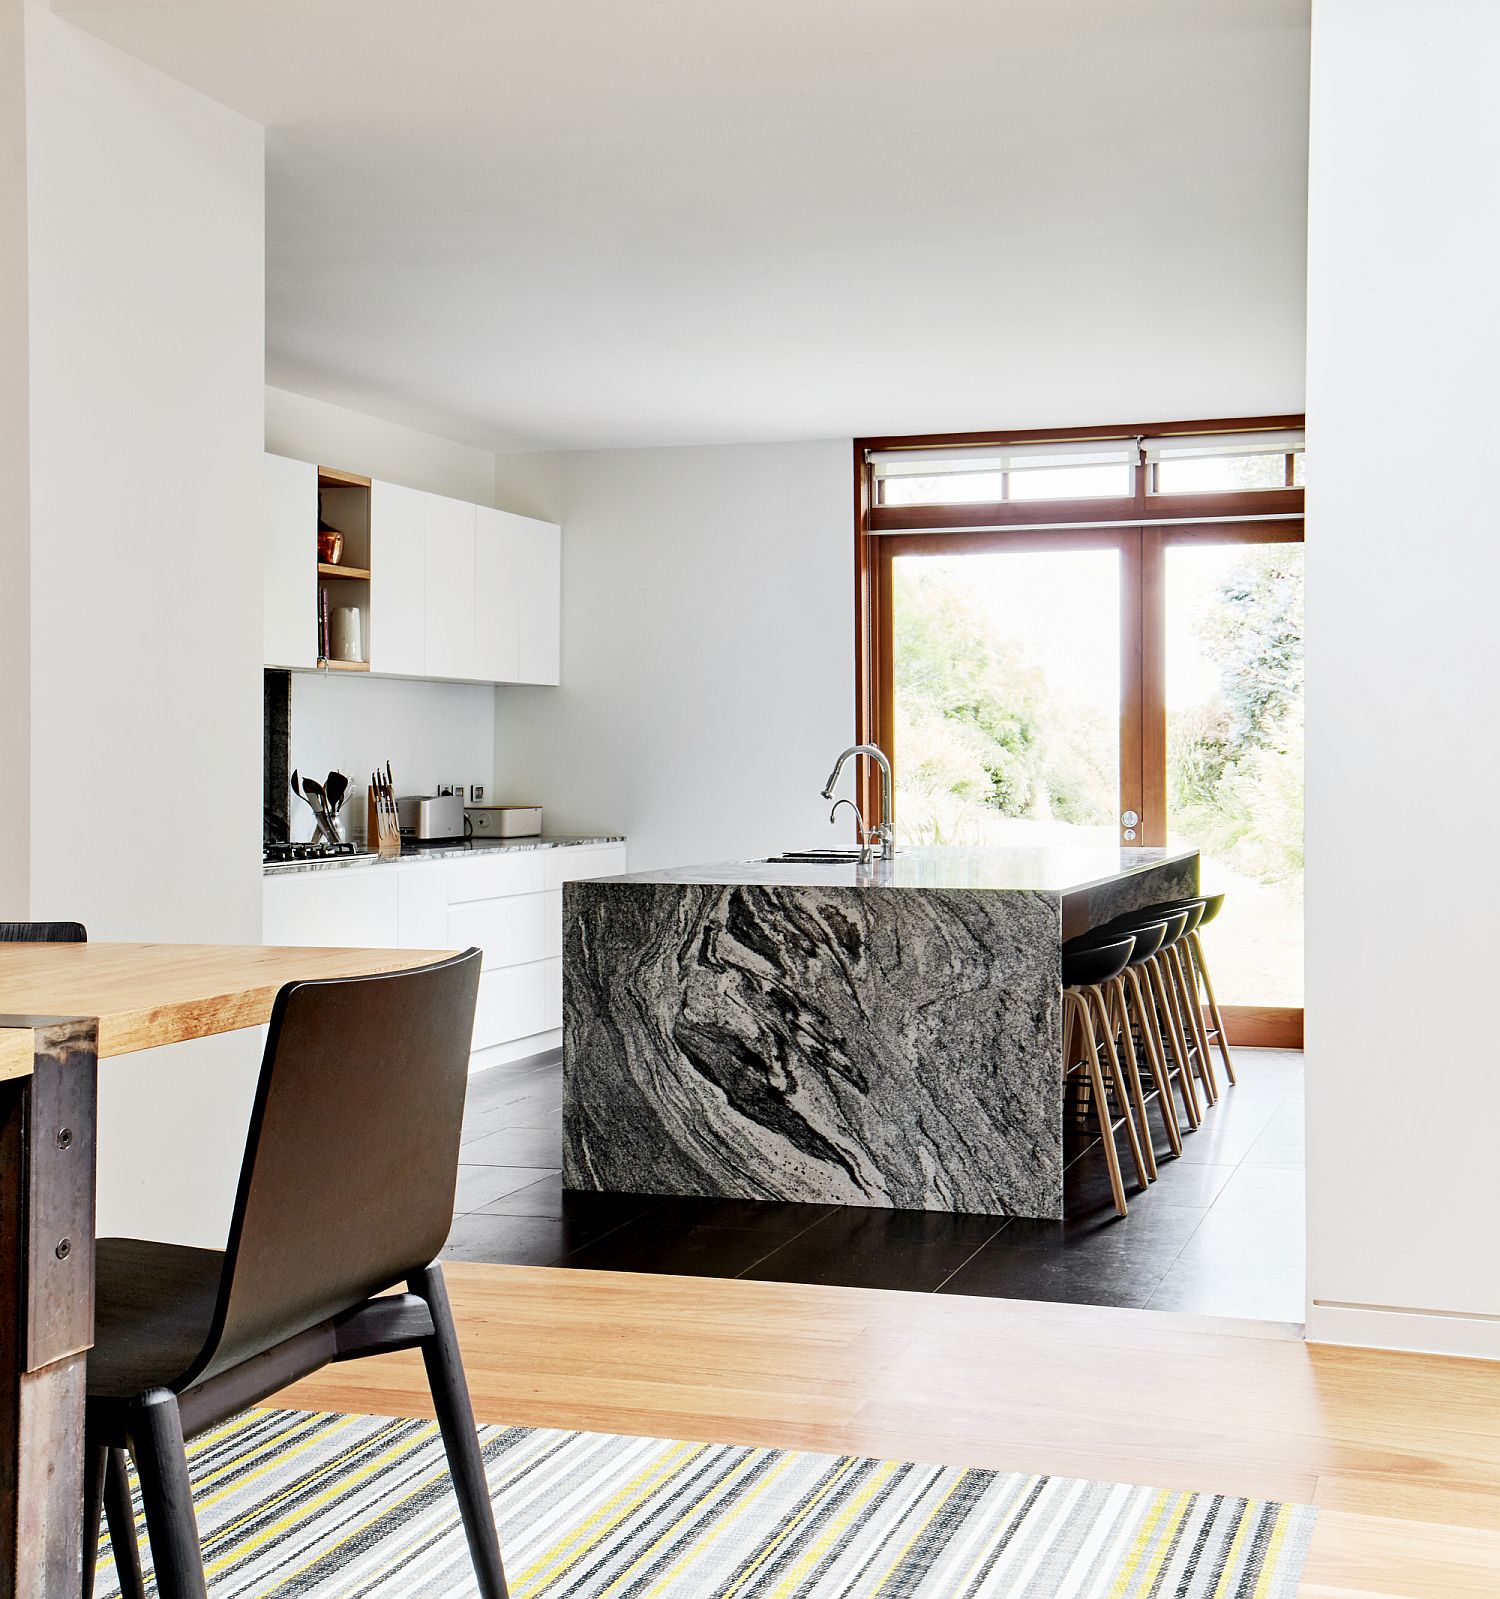 Stunning stone kitchen island steals the spotlight in this all-white kitchen